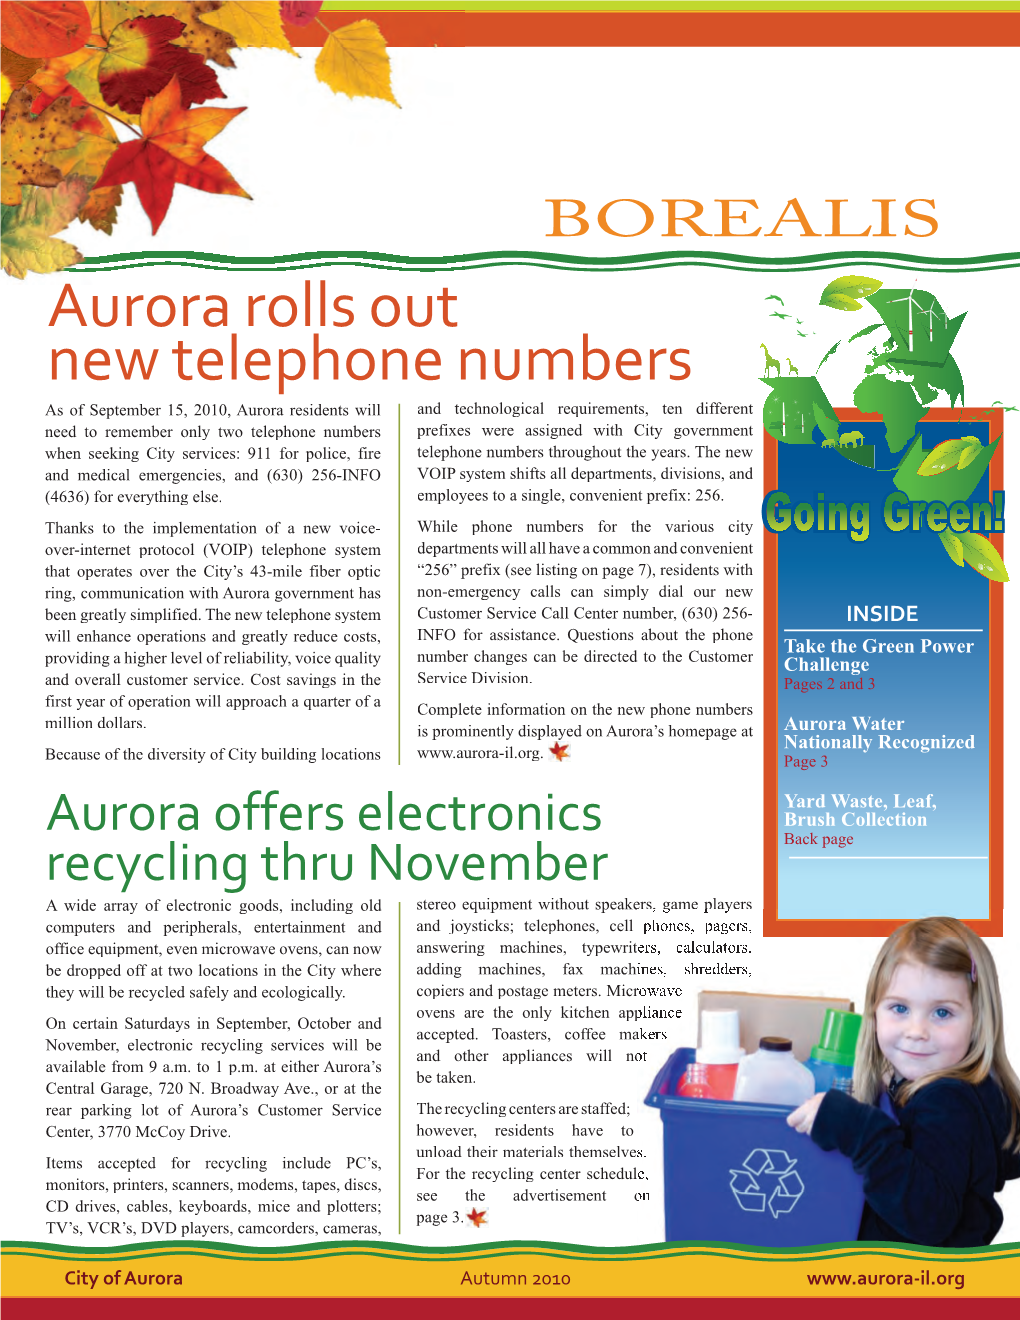 Autumn 2010 Aurora Borealis Newsletter